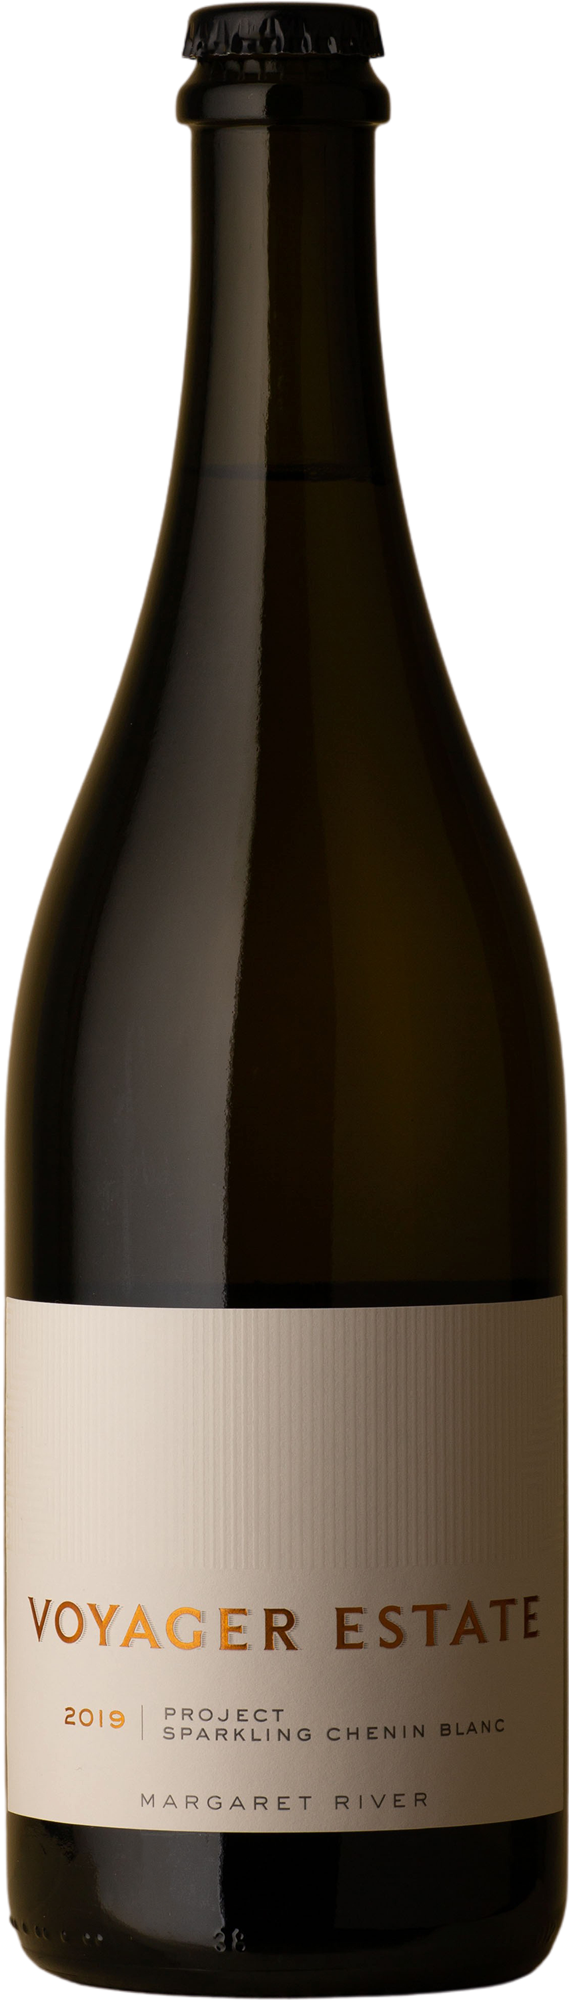 Voyager Estate - Project Sparkling Chenin Blanc 2019 Sparkling Wine